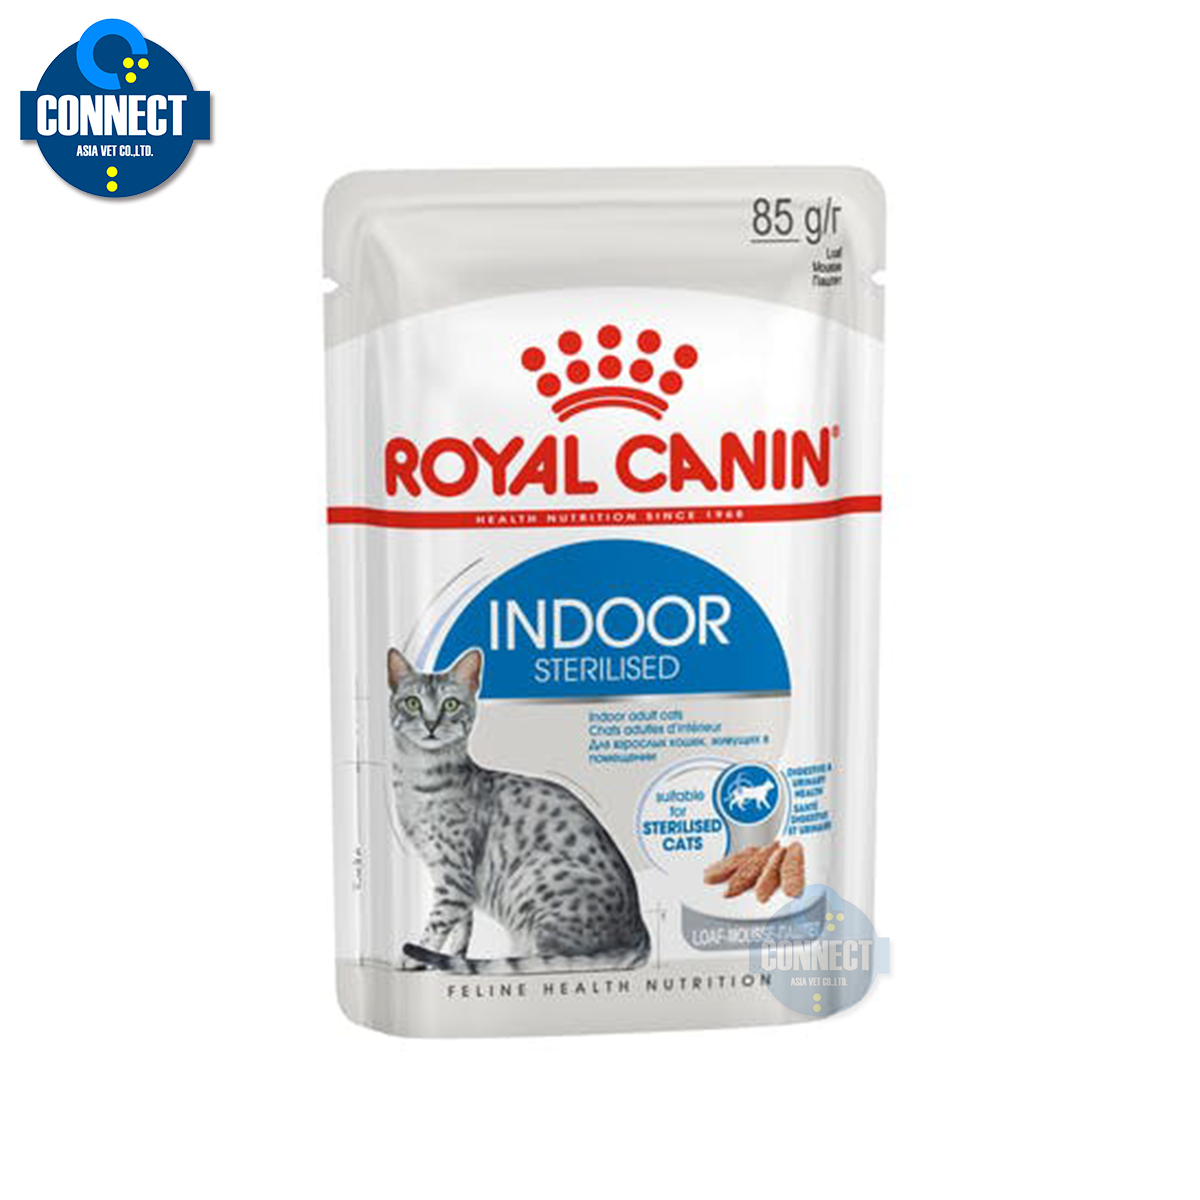 Royal Canin Indoor Sterilised Loaf ขนาด 85 กรัม จำนวน 12 ซอง.